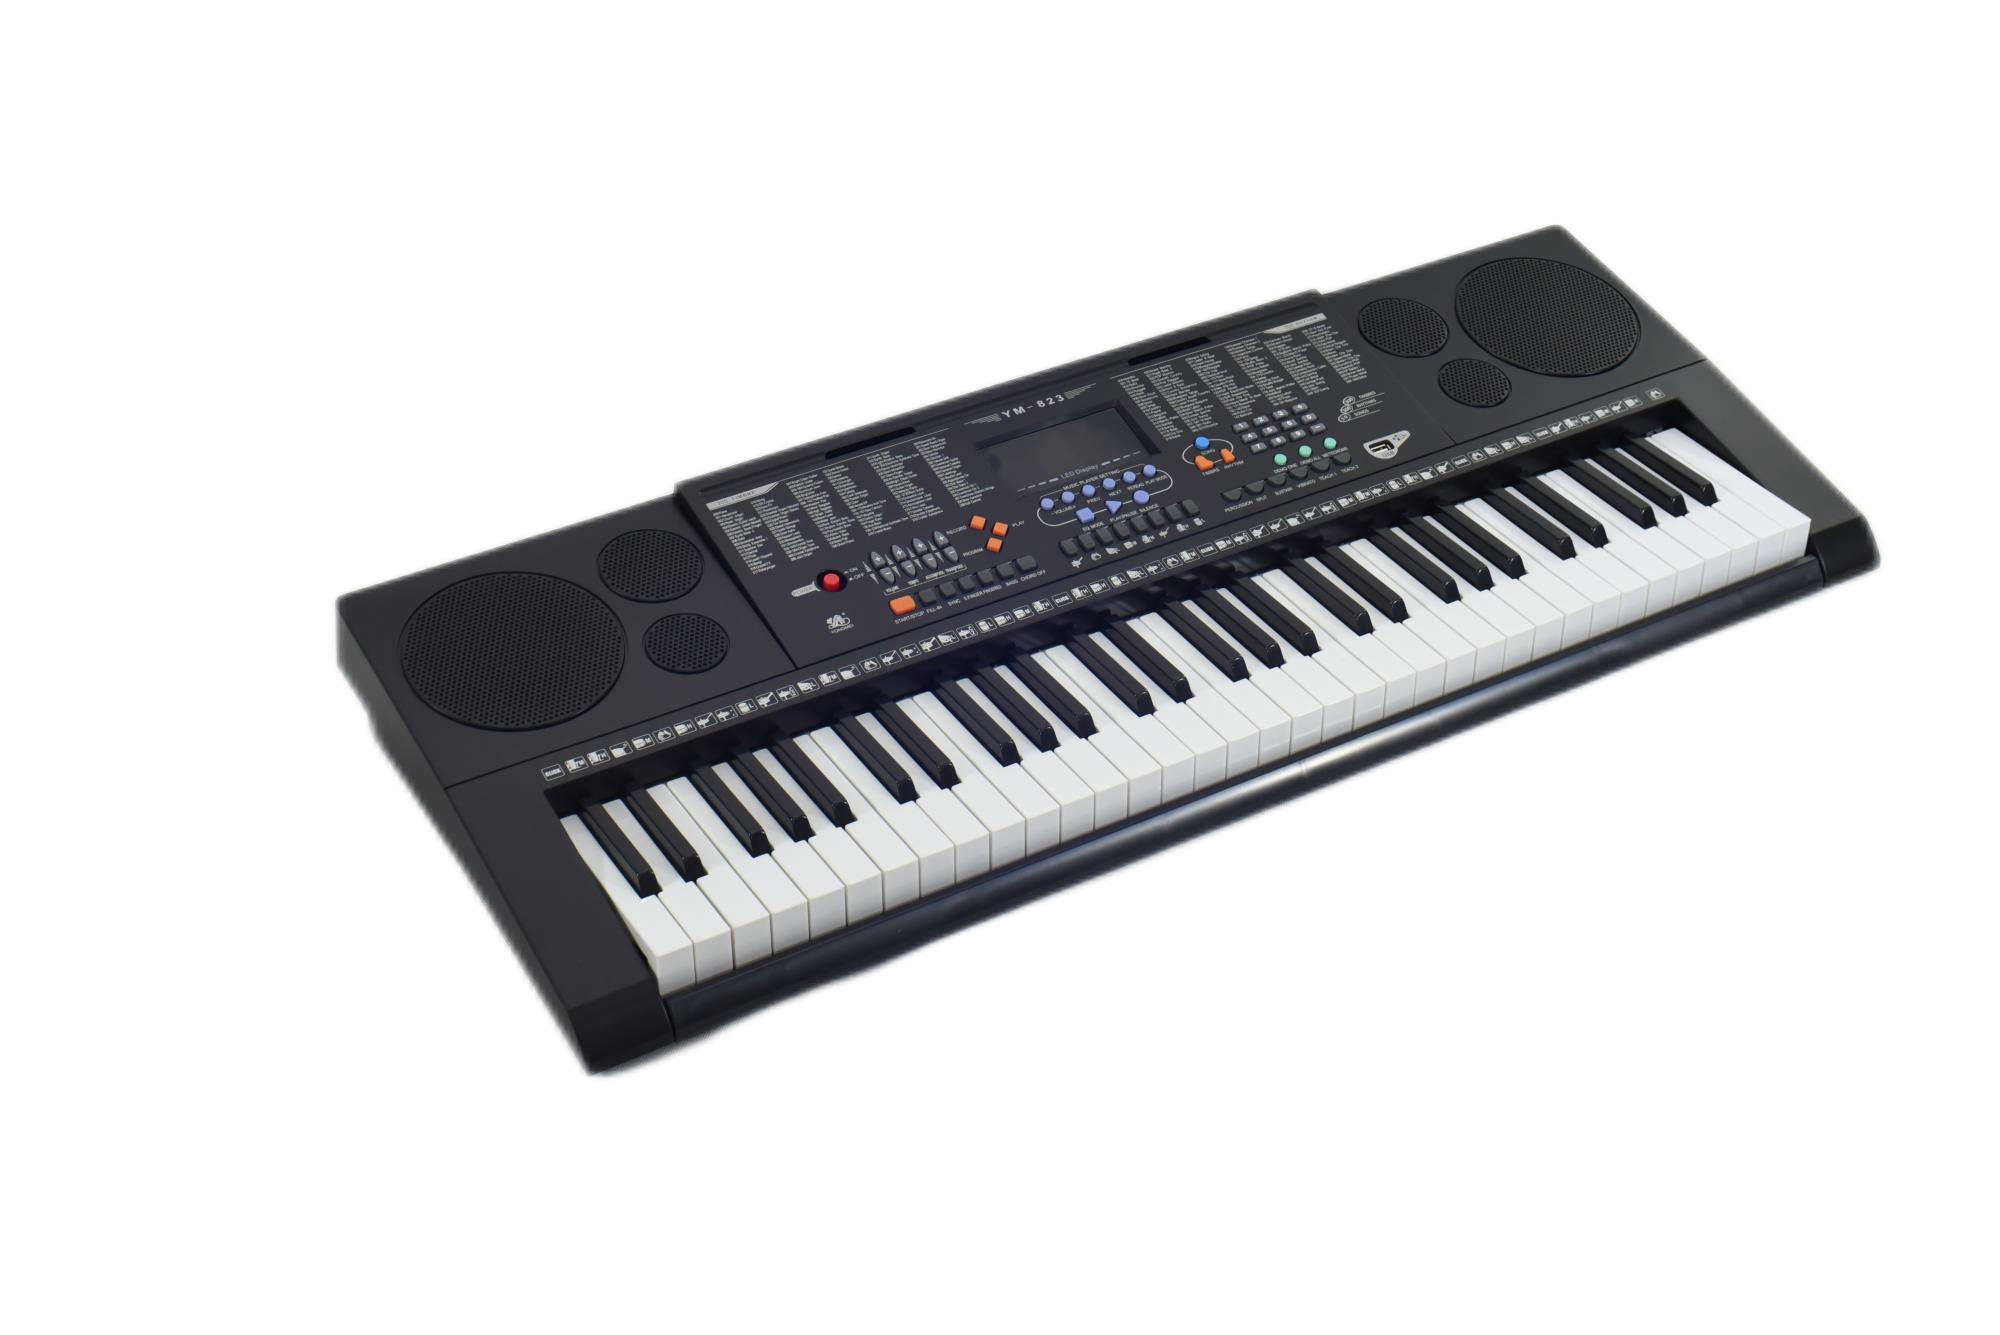 61 Piano-Styled Keys/LED Display Electric Keyboard(MK61823)